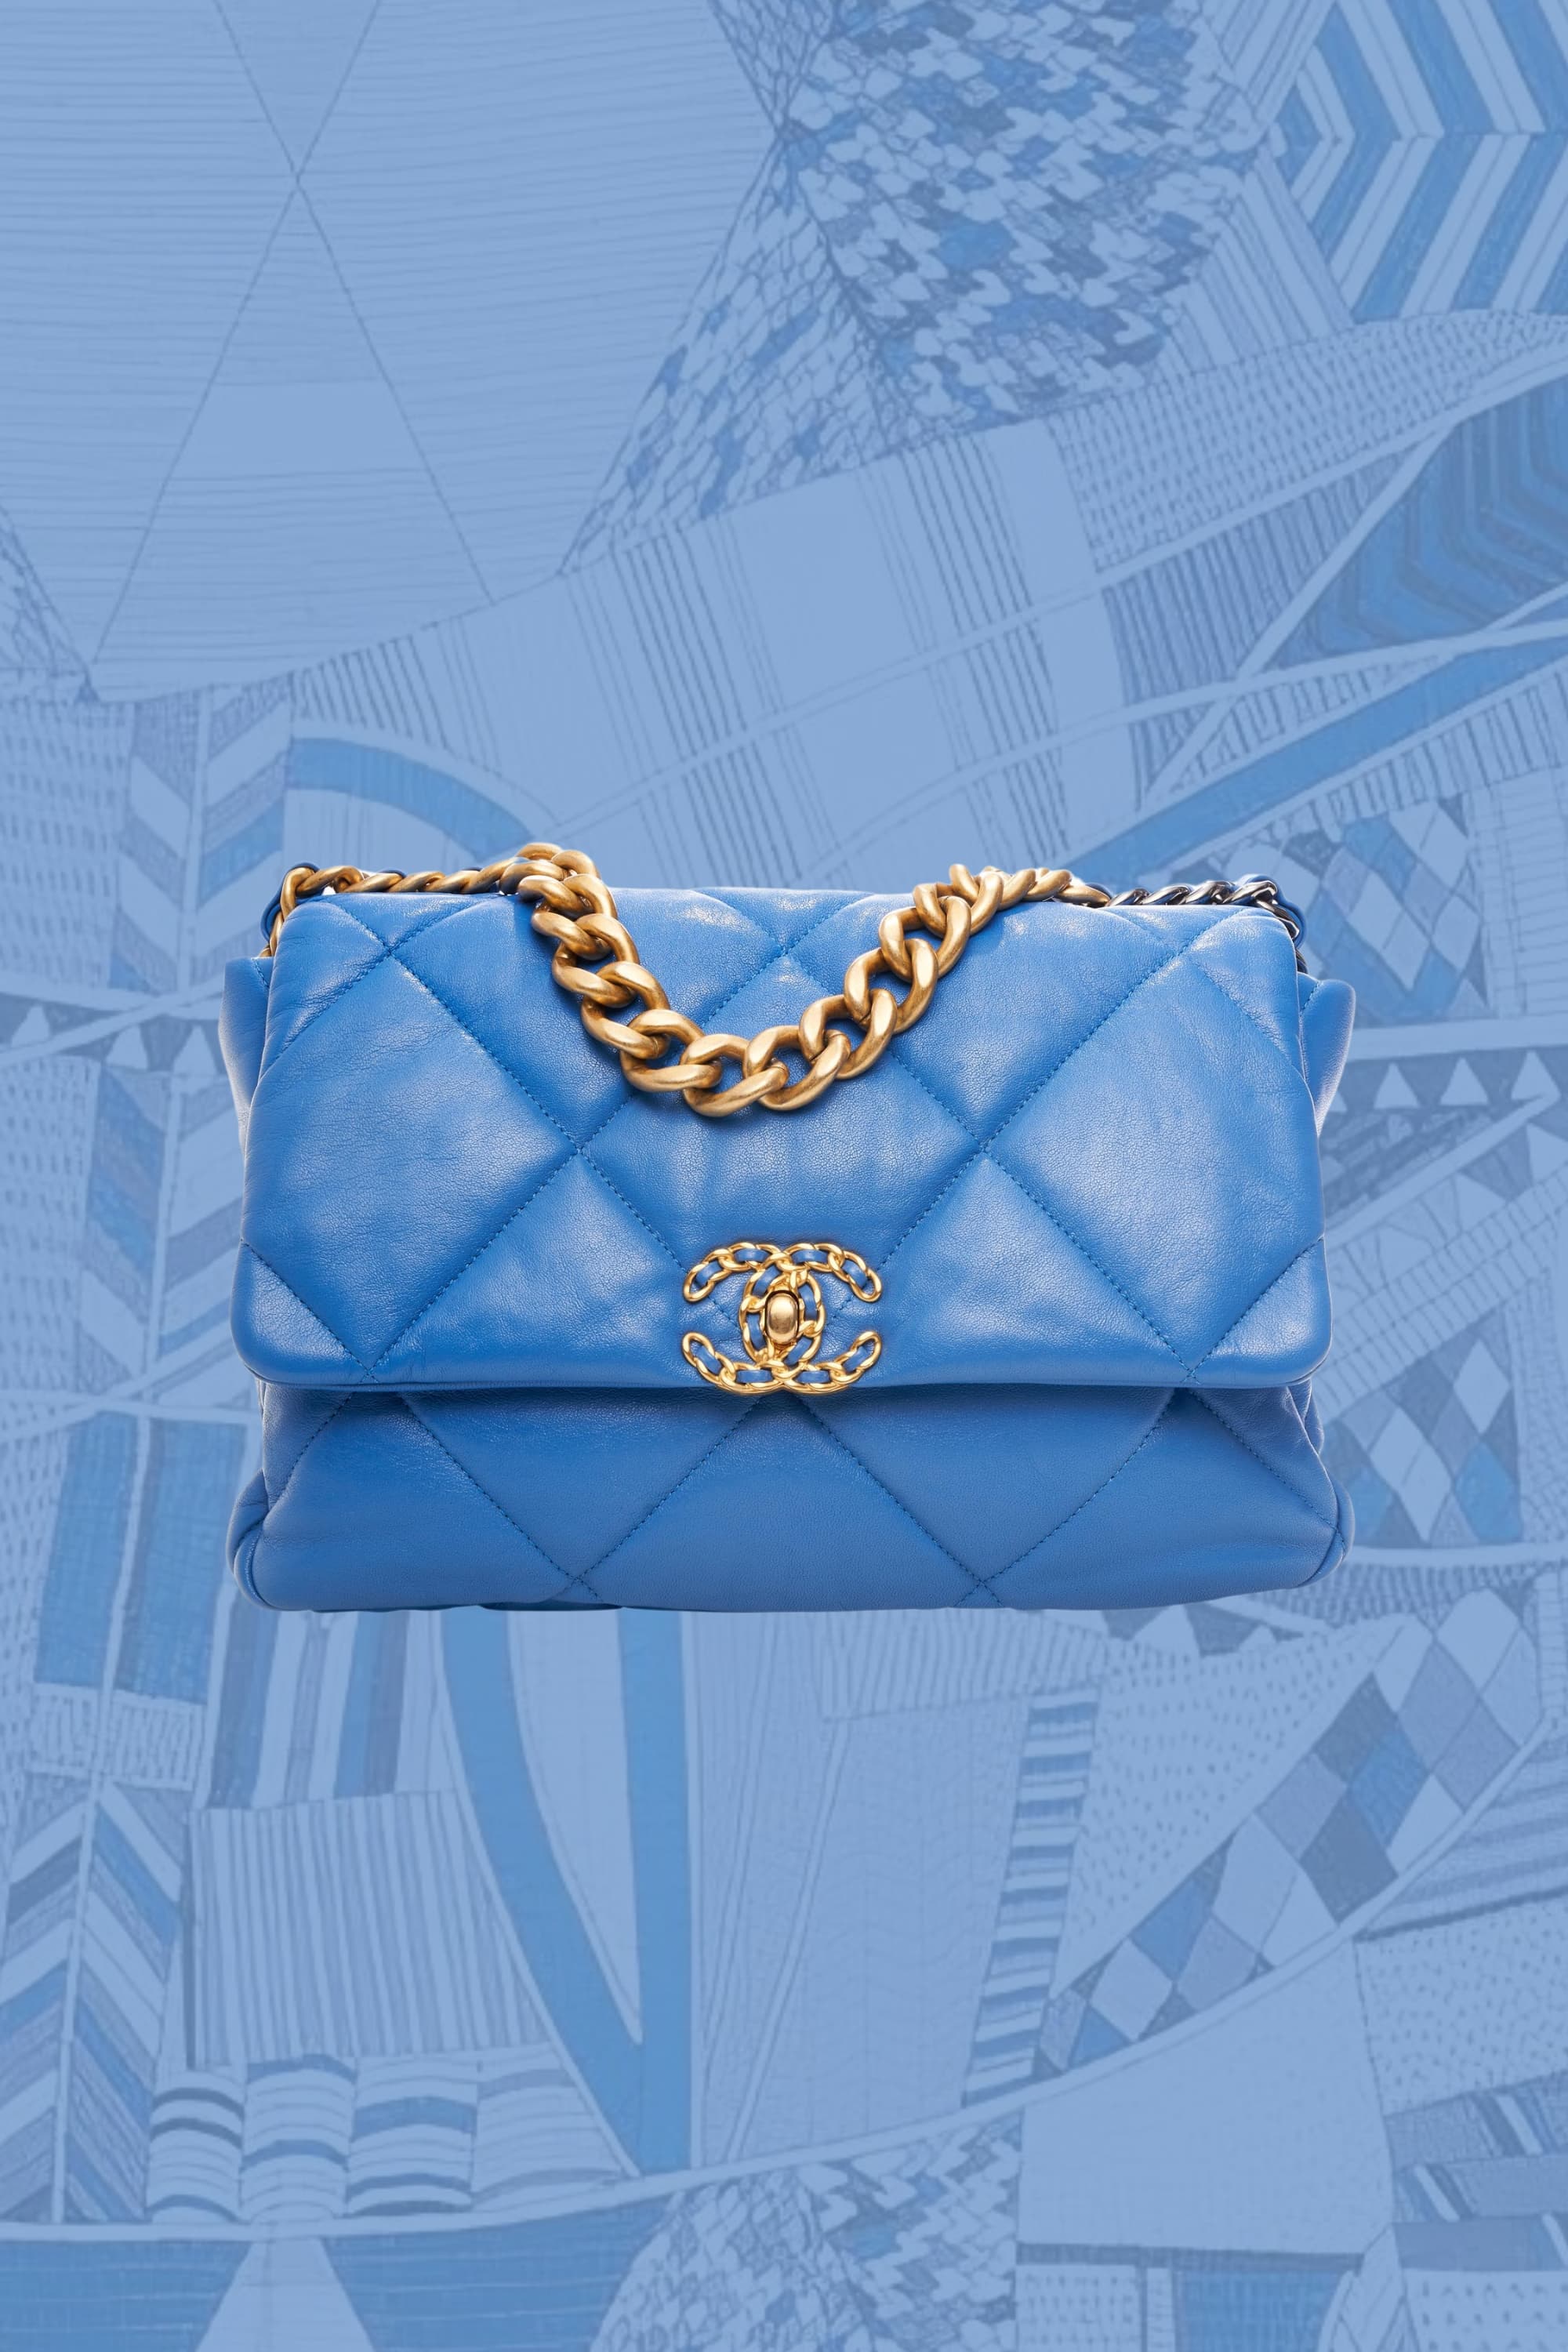 Chanel Flap Handbag